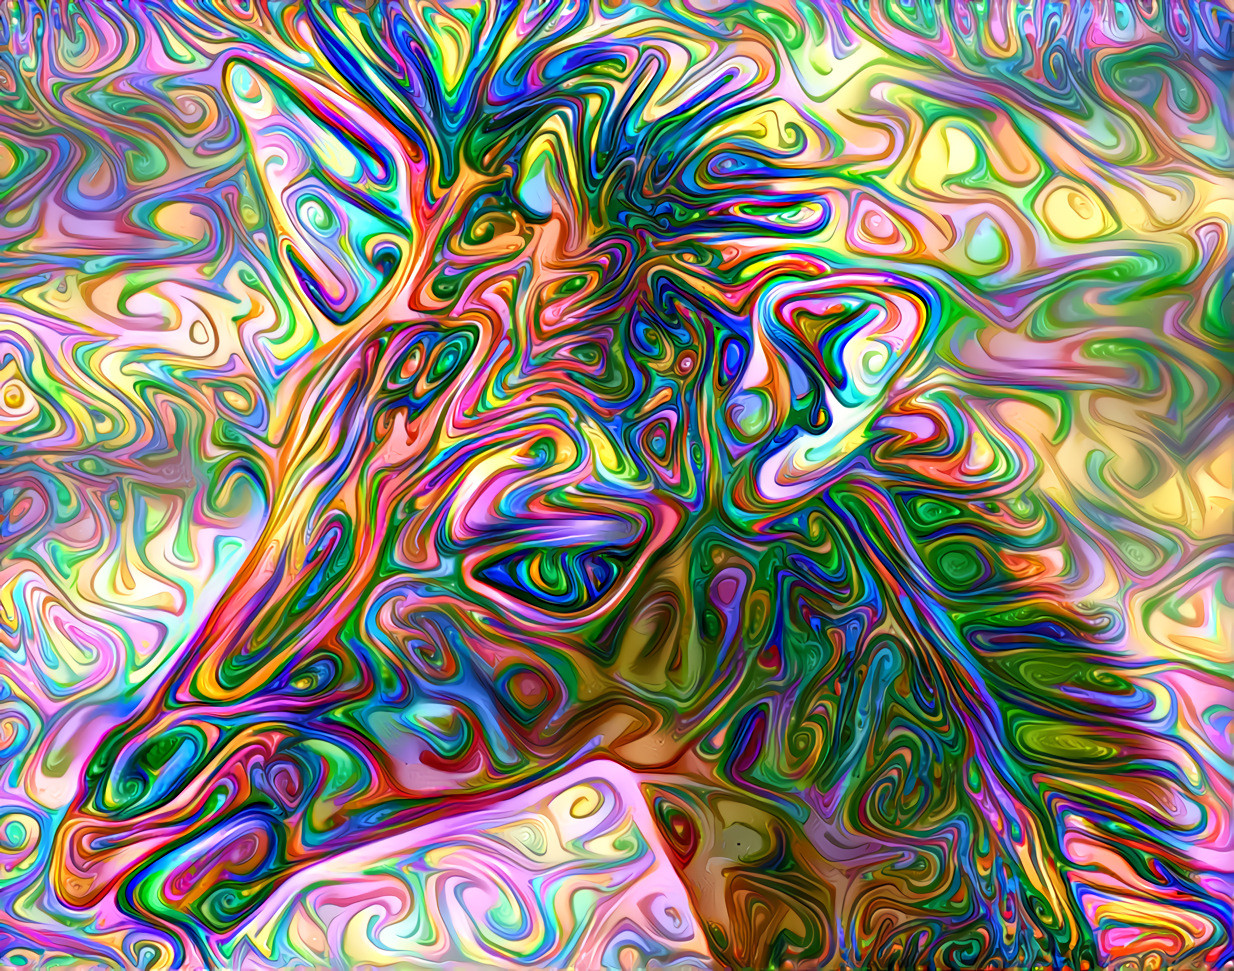 Psychedelic Giraffe #3 - Style by Daniel W. Prust